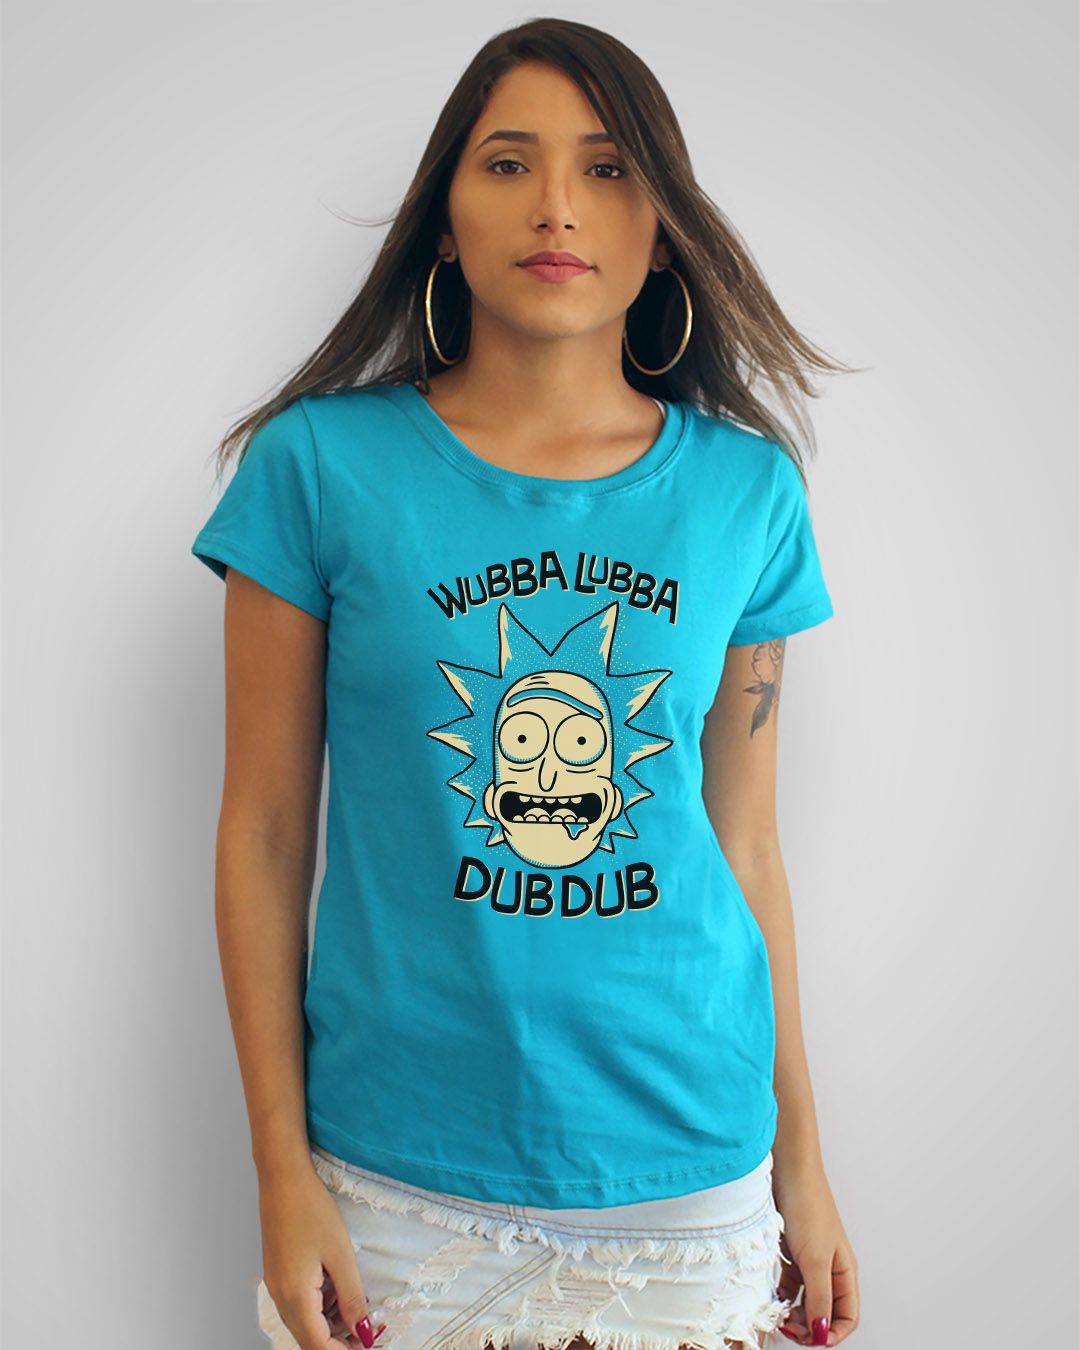 Camiseta Wubba lubba dub dub - Rick and Morty